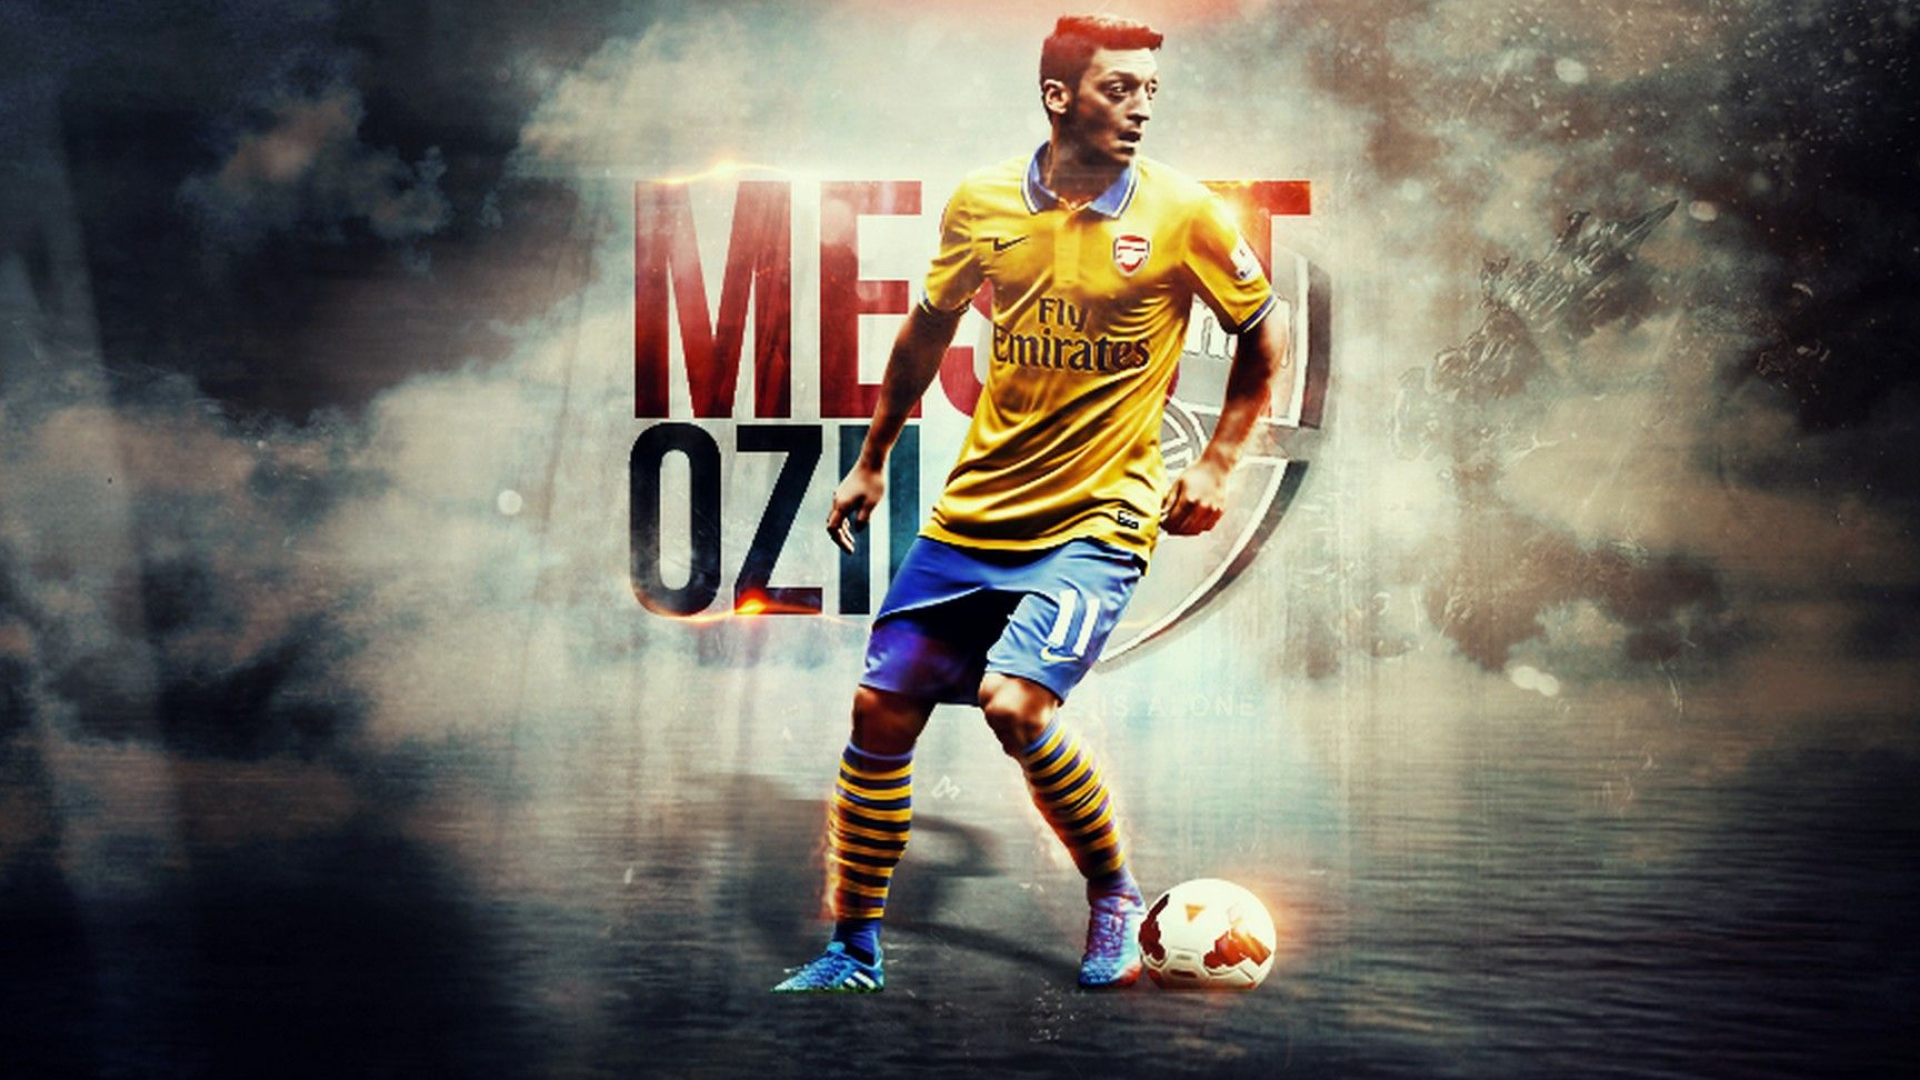 1920x1080 Mesut Ozil Arsenal Wallpaper 2022 Live Wallpaper HD | Arsenal wallpapers, Mesut ozil arsenal, Arsenal